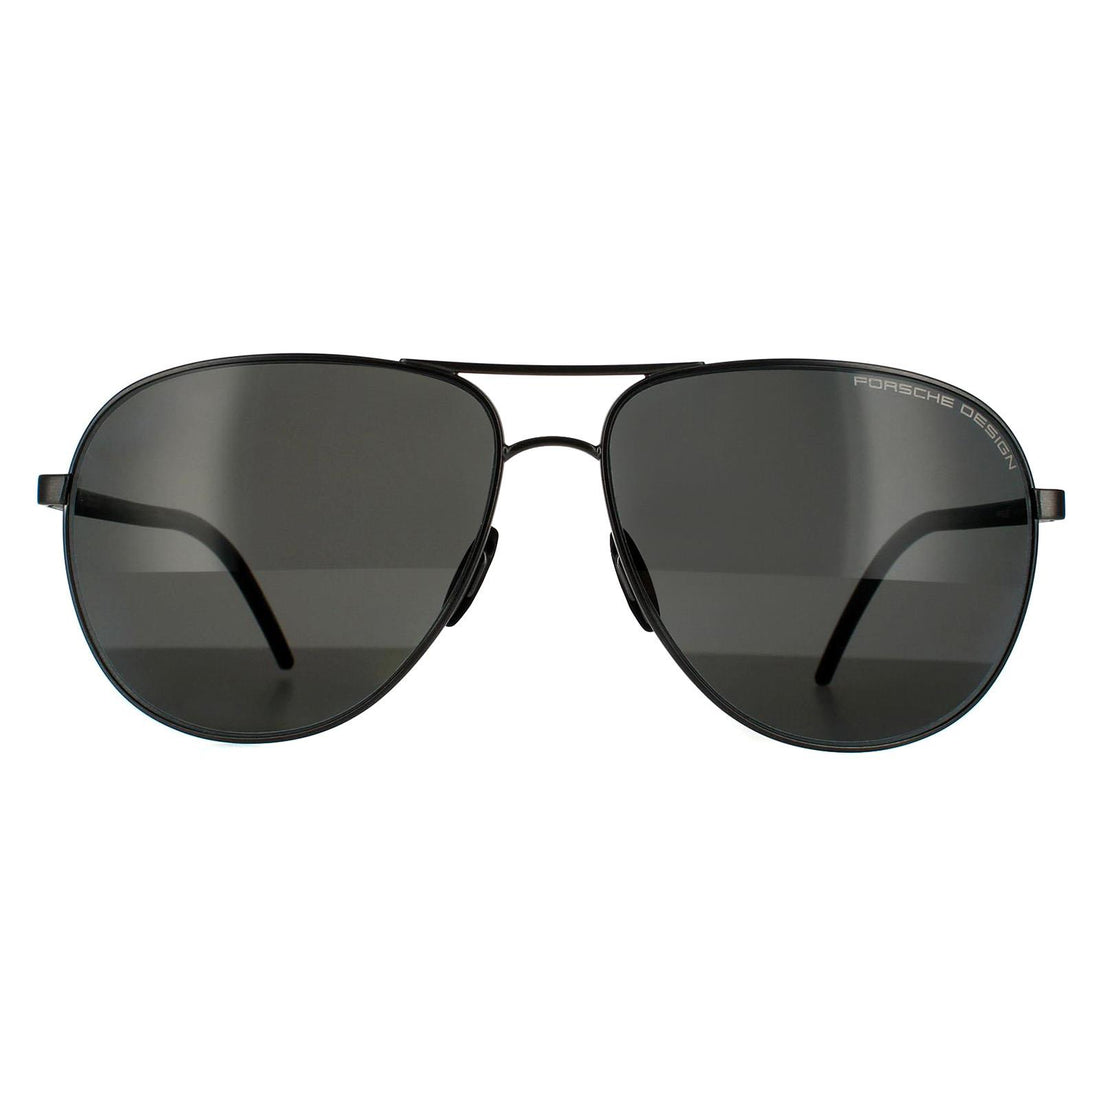 Porsche Design P8651 Sunglasses Dark Gun / Grey Polarized